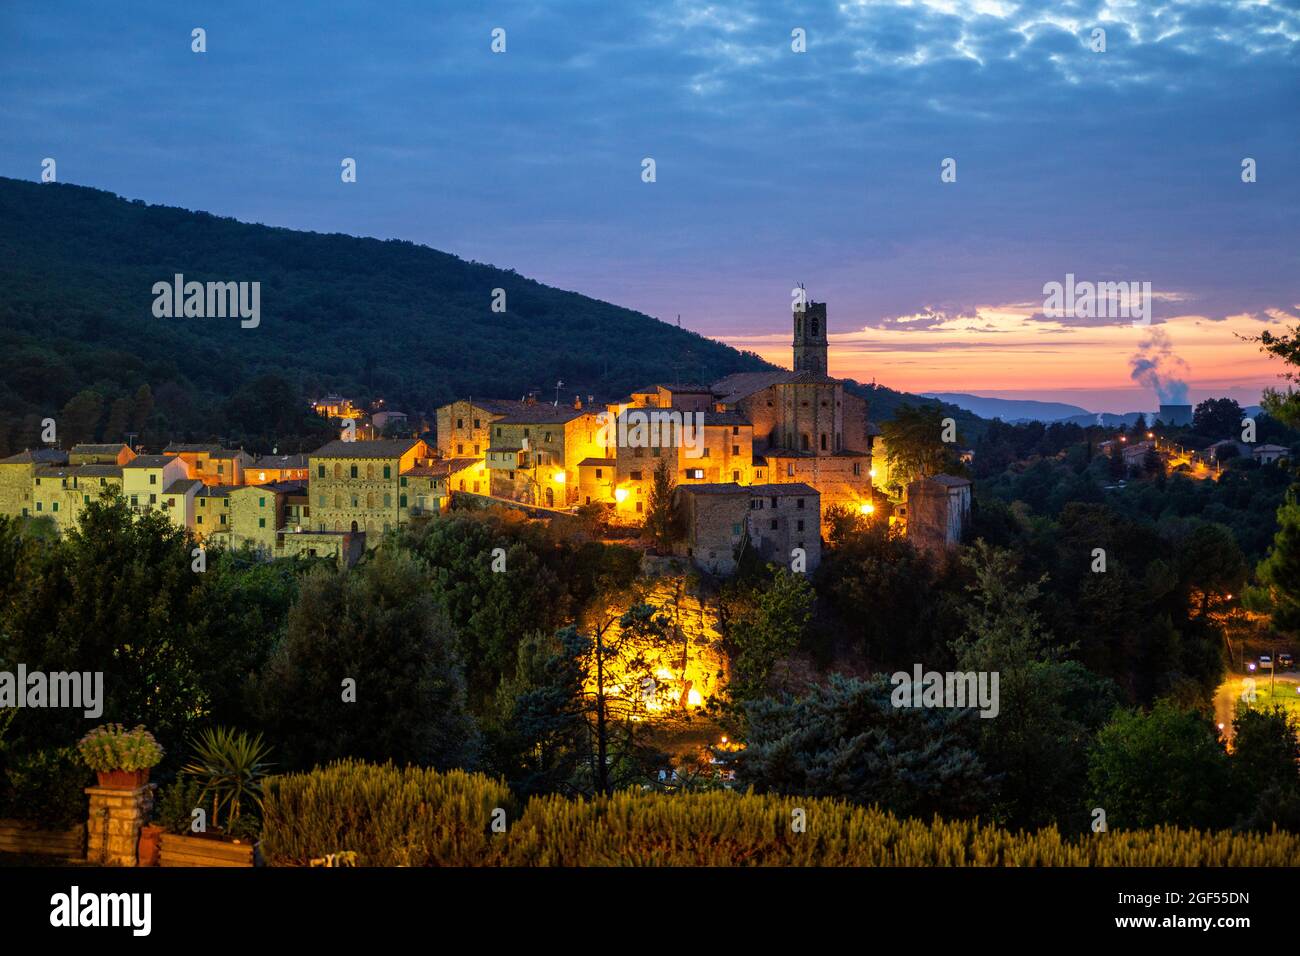 Italy, Province of Pisa, Sasso Pisano, Illuminated village at dusk Stock Photo